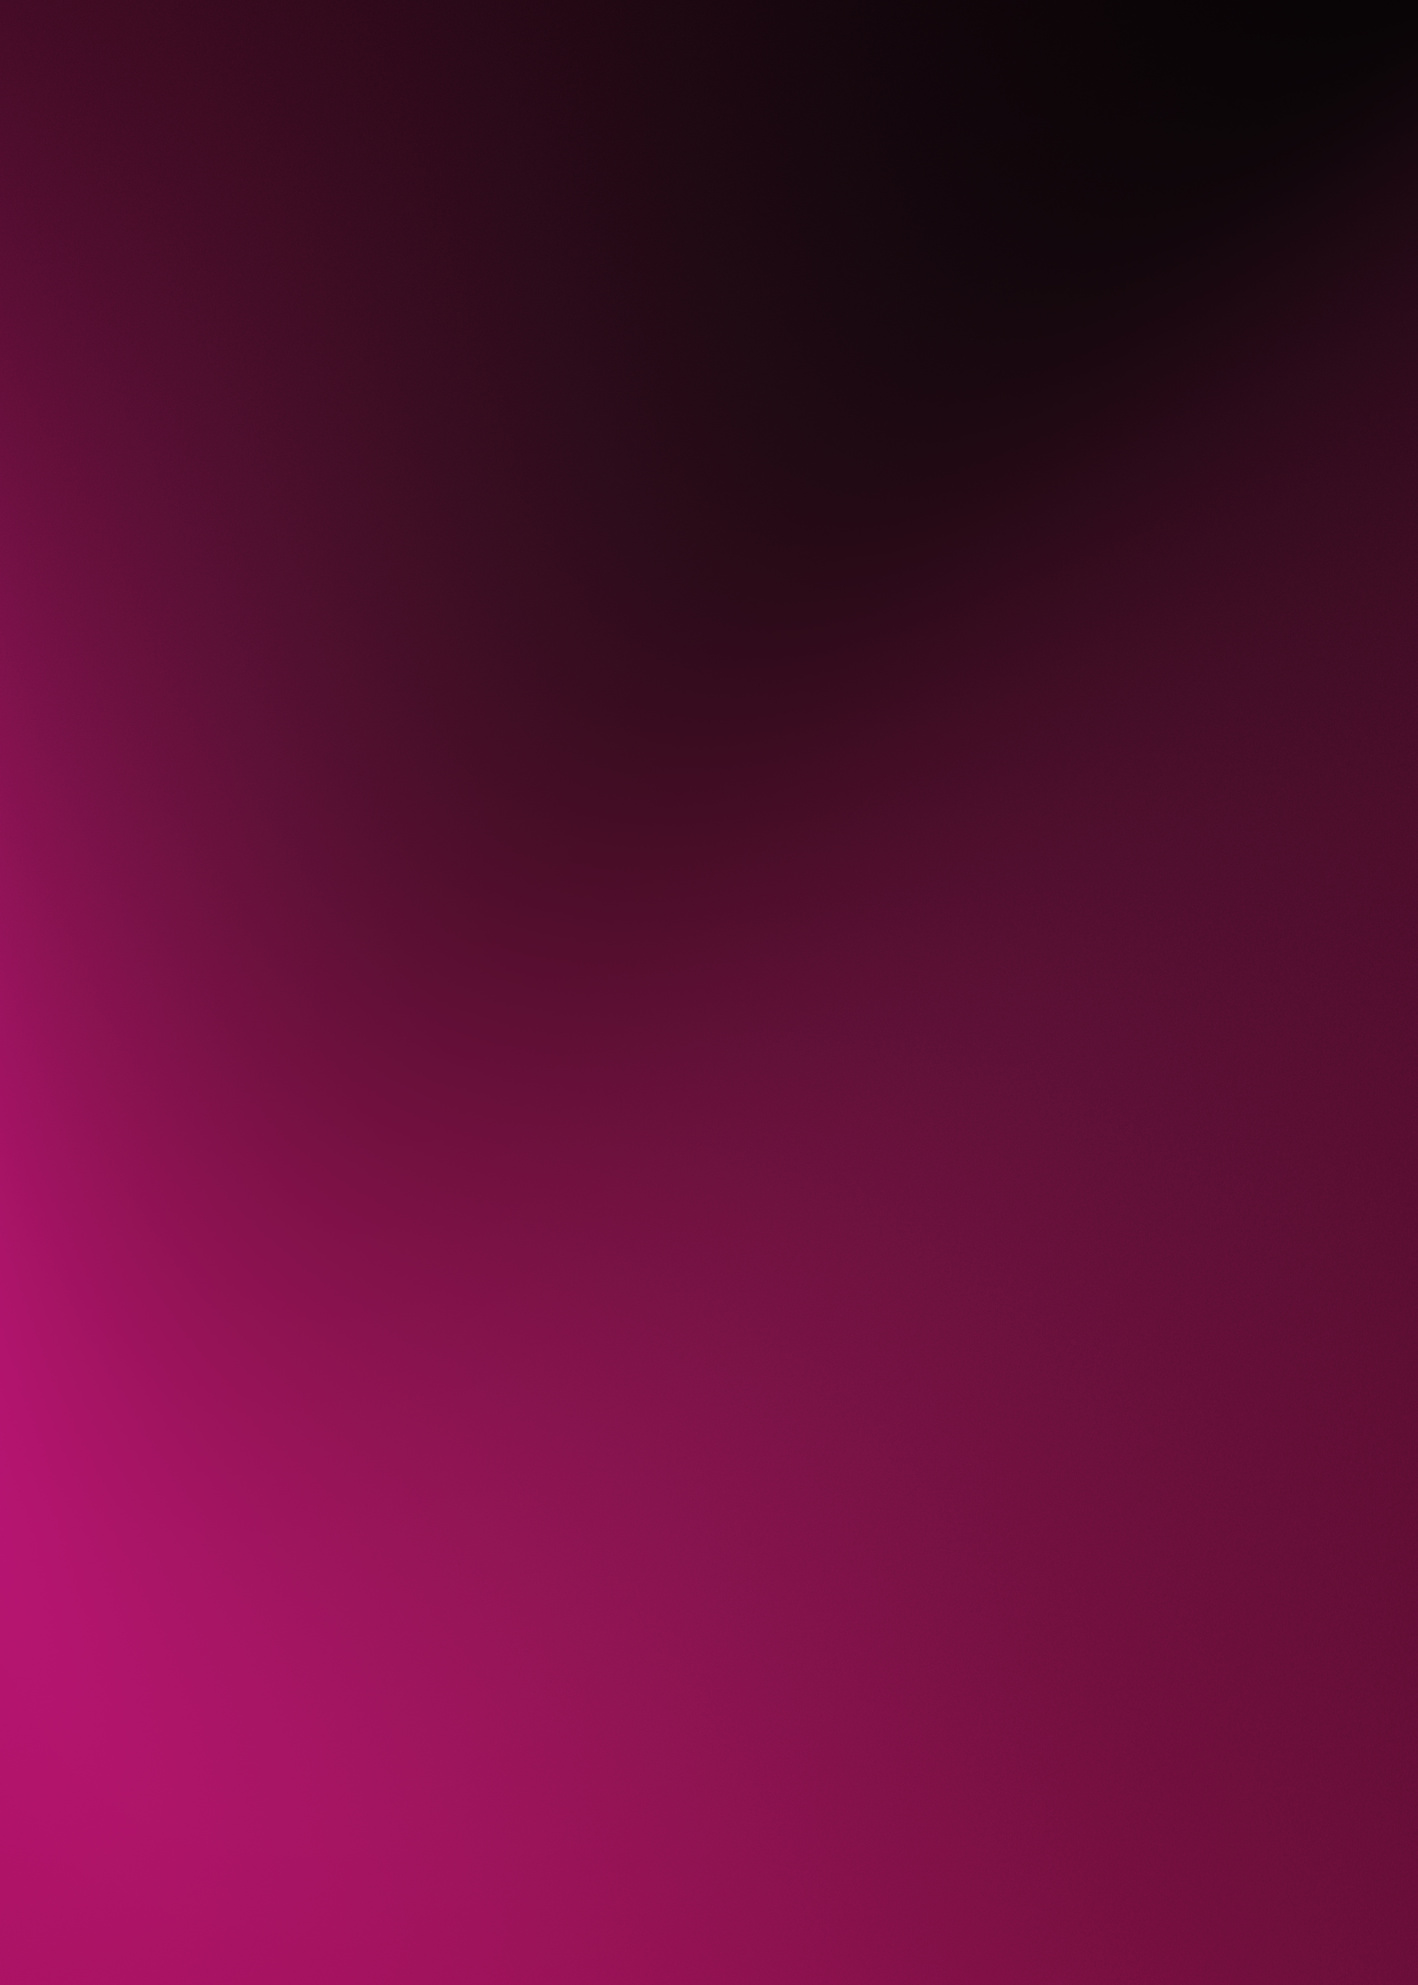 gradient blur pink and black background